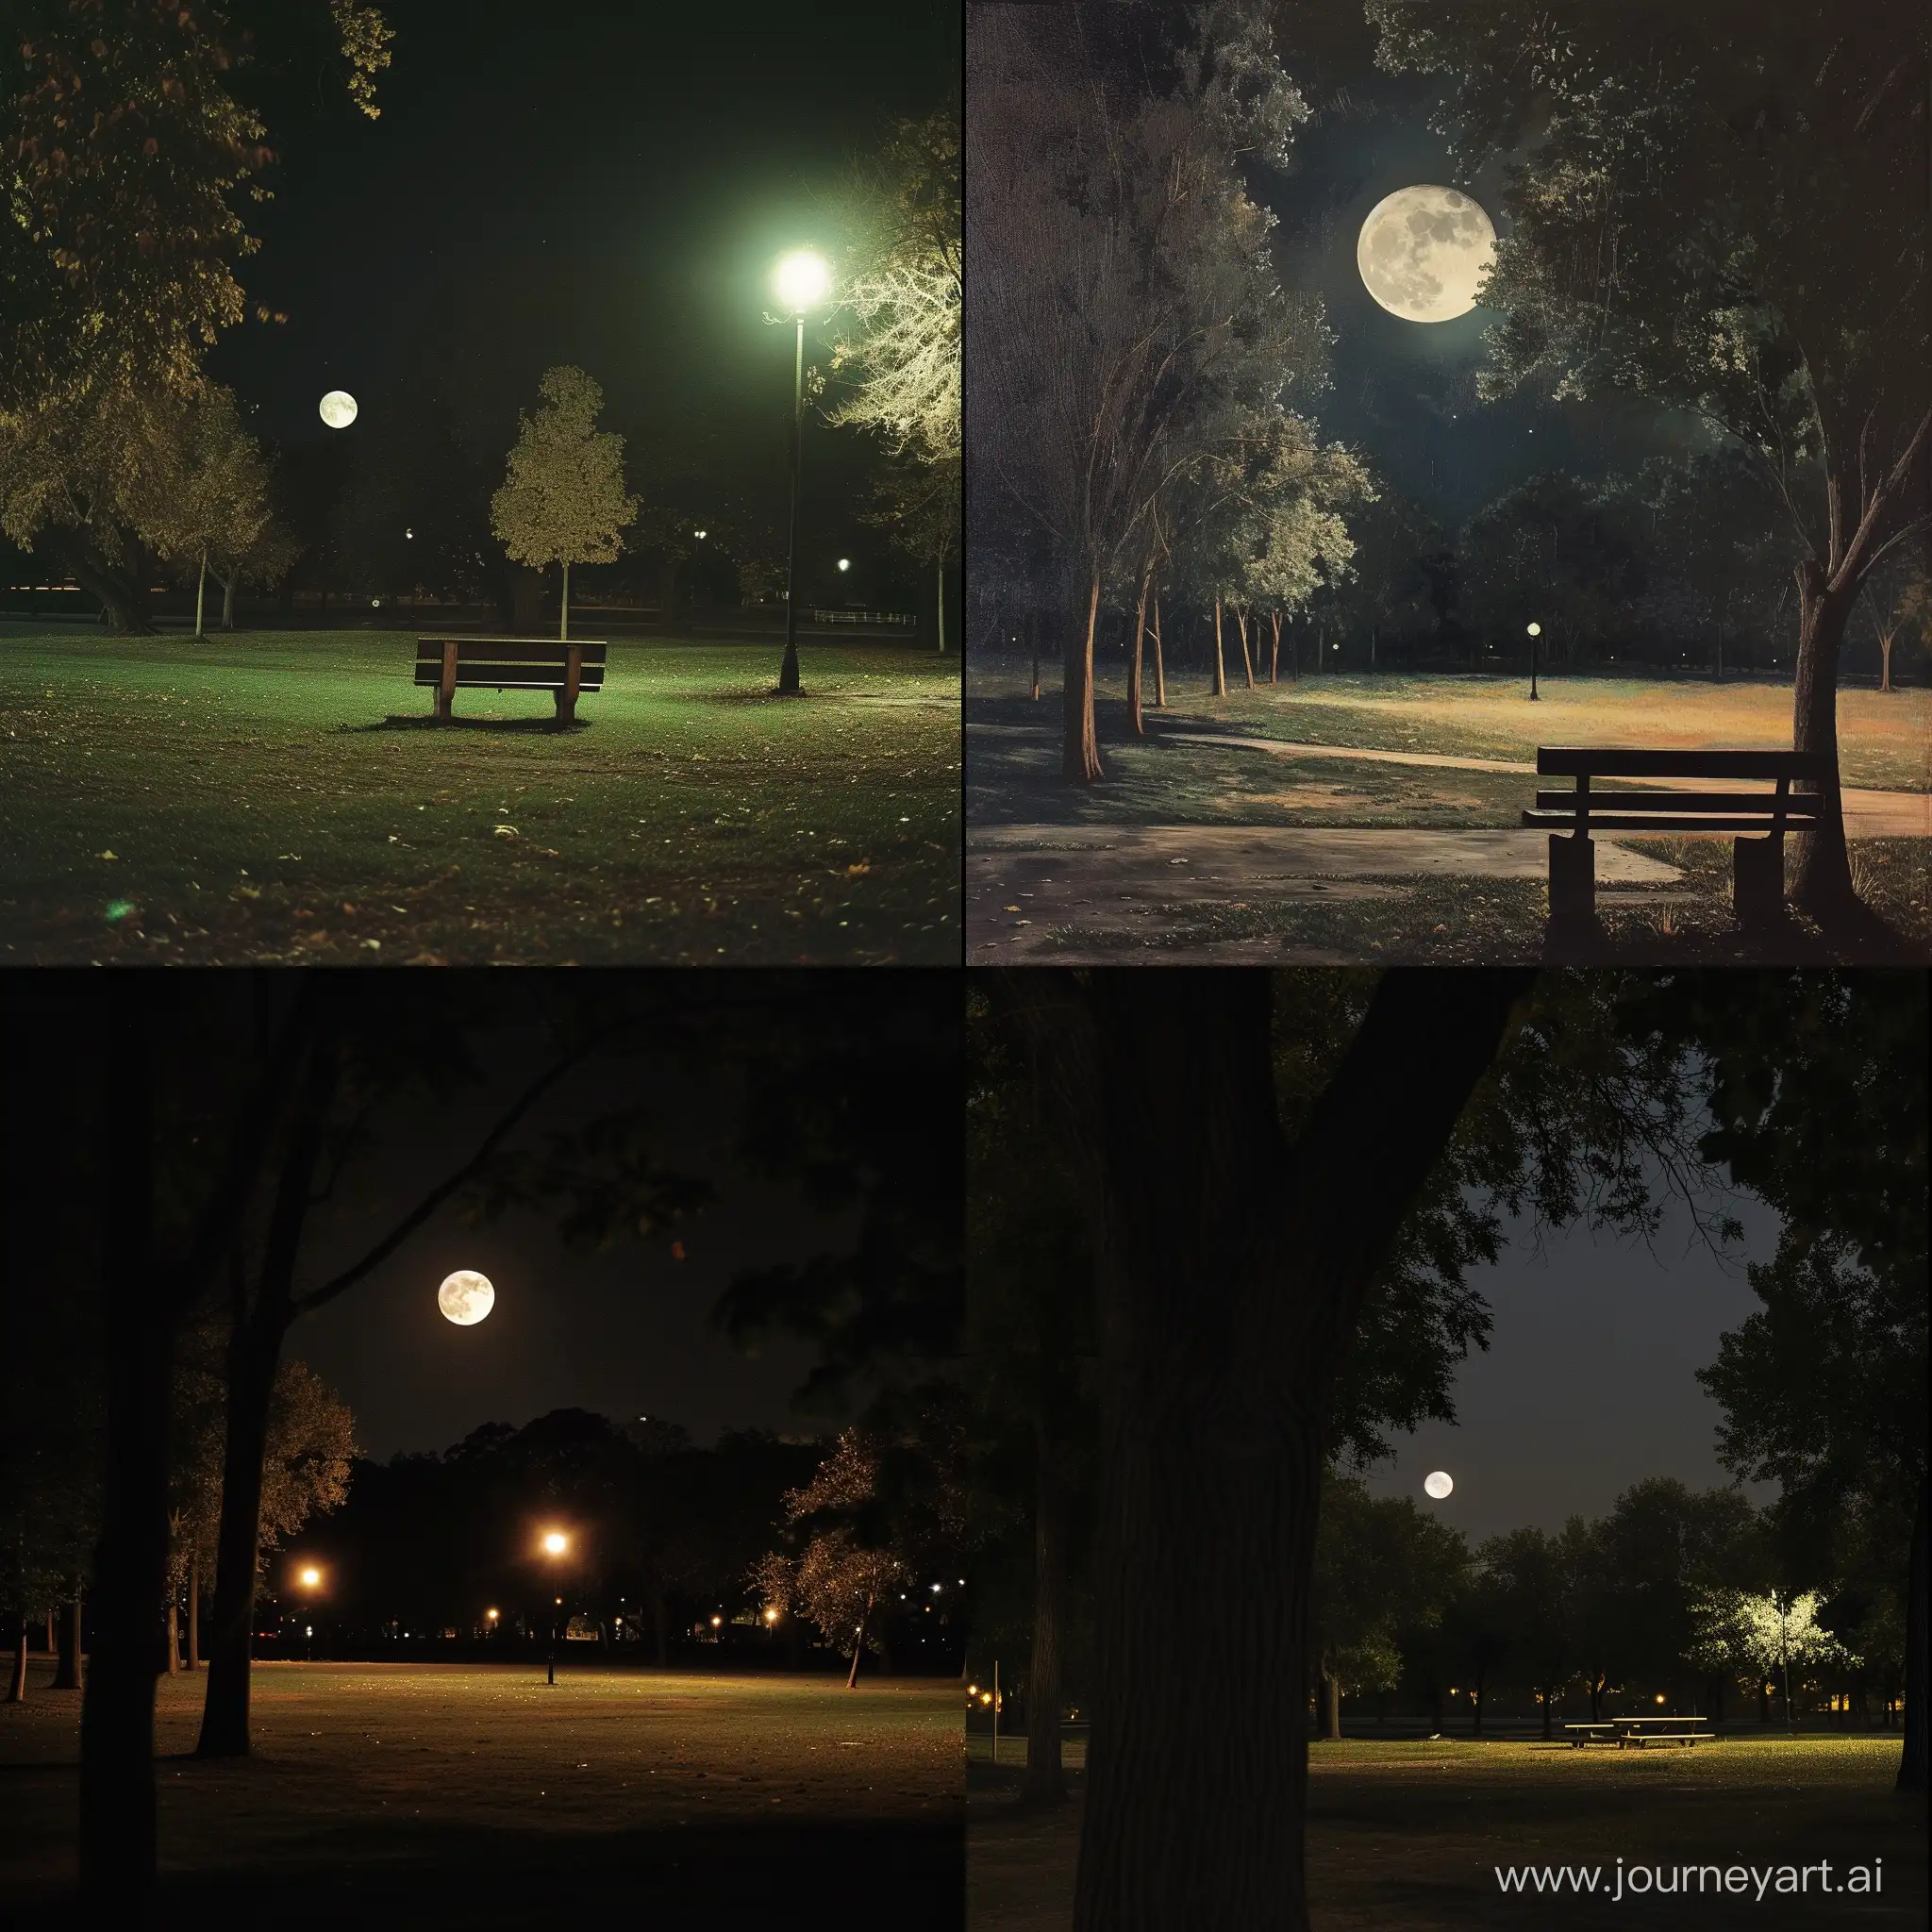 Moonlit-Park-Night-with-Serene-Atmosphere